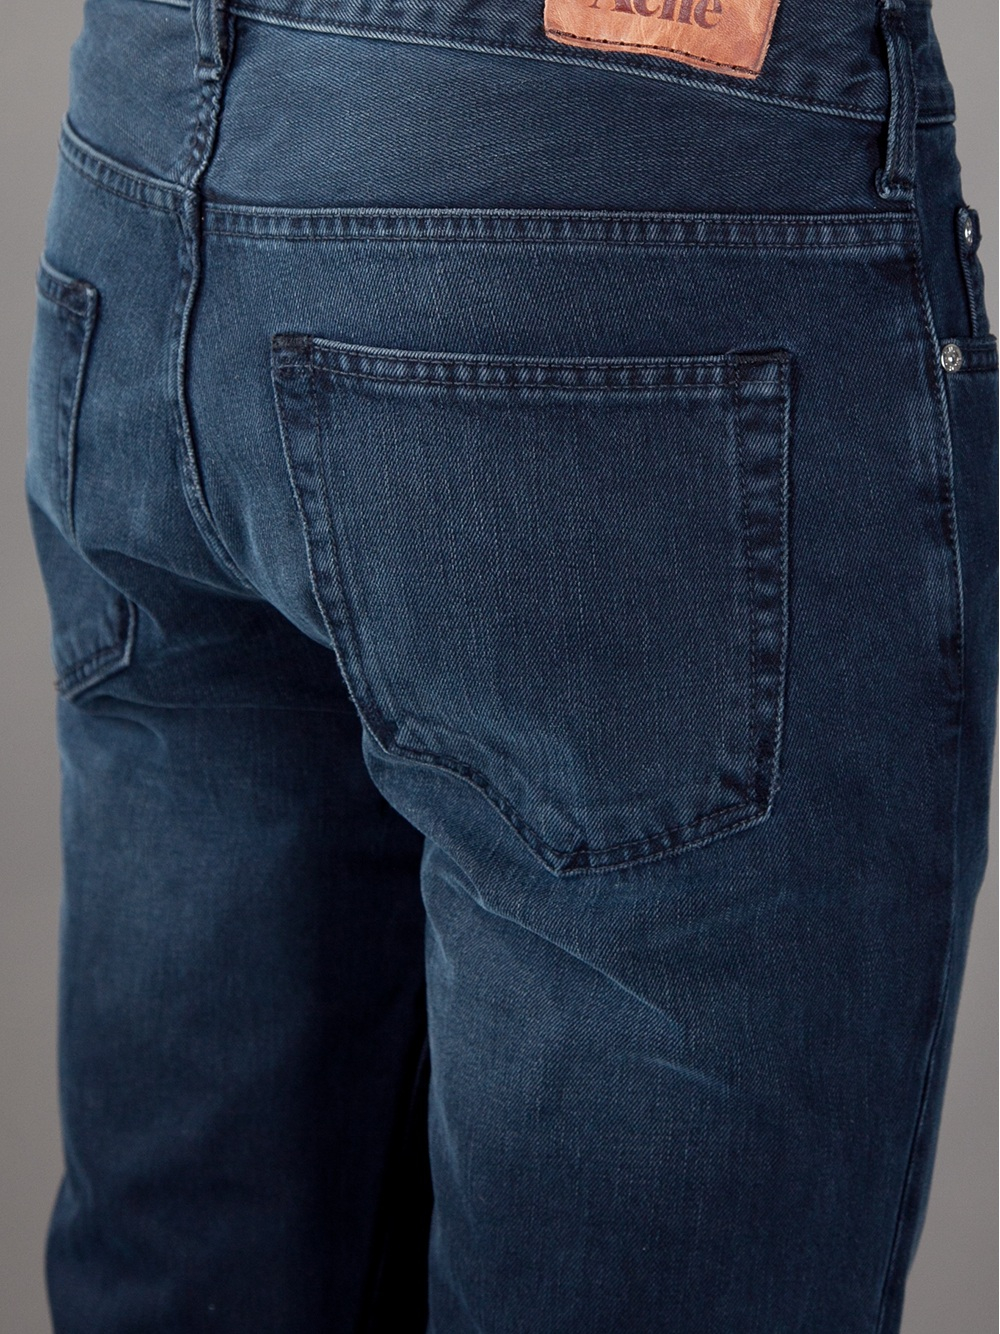 Lyst - Acne Studios 'Roc Lana Blue' Jeans in Blue for Men